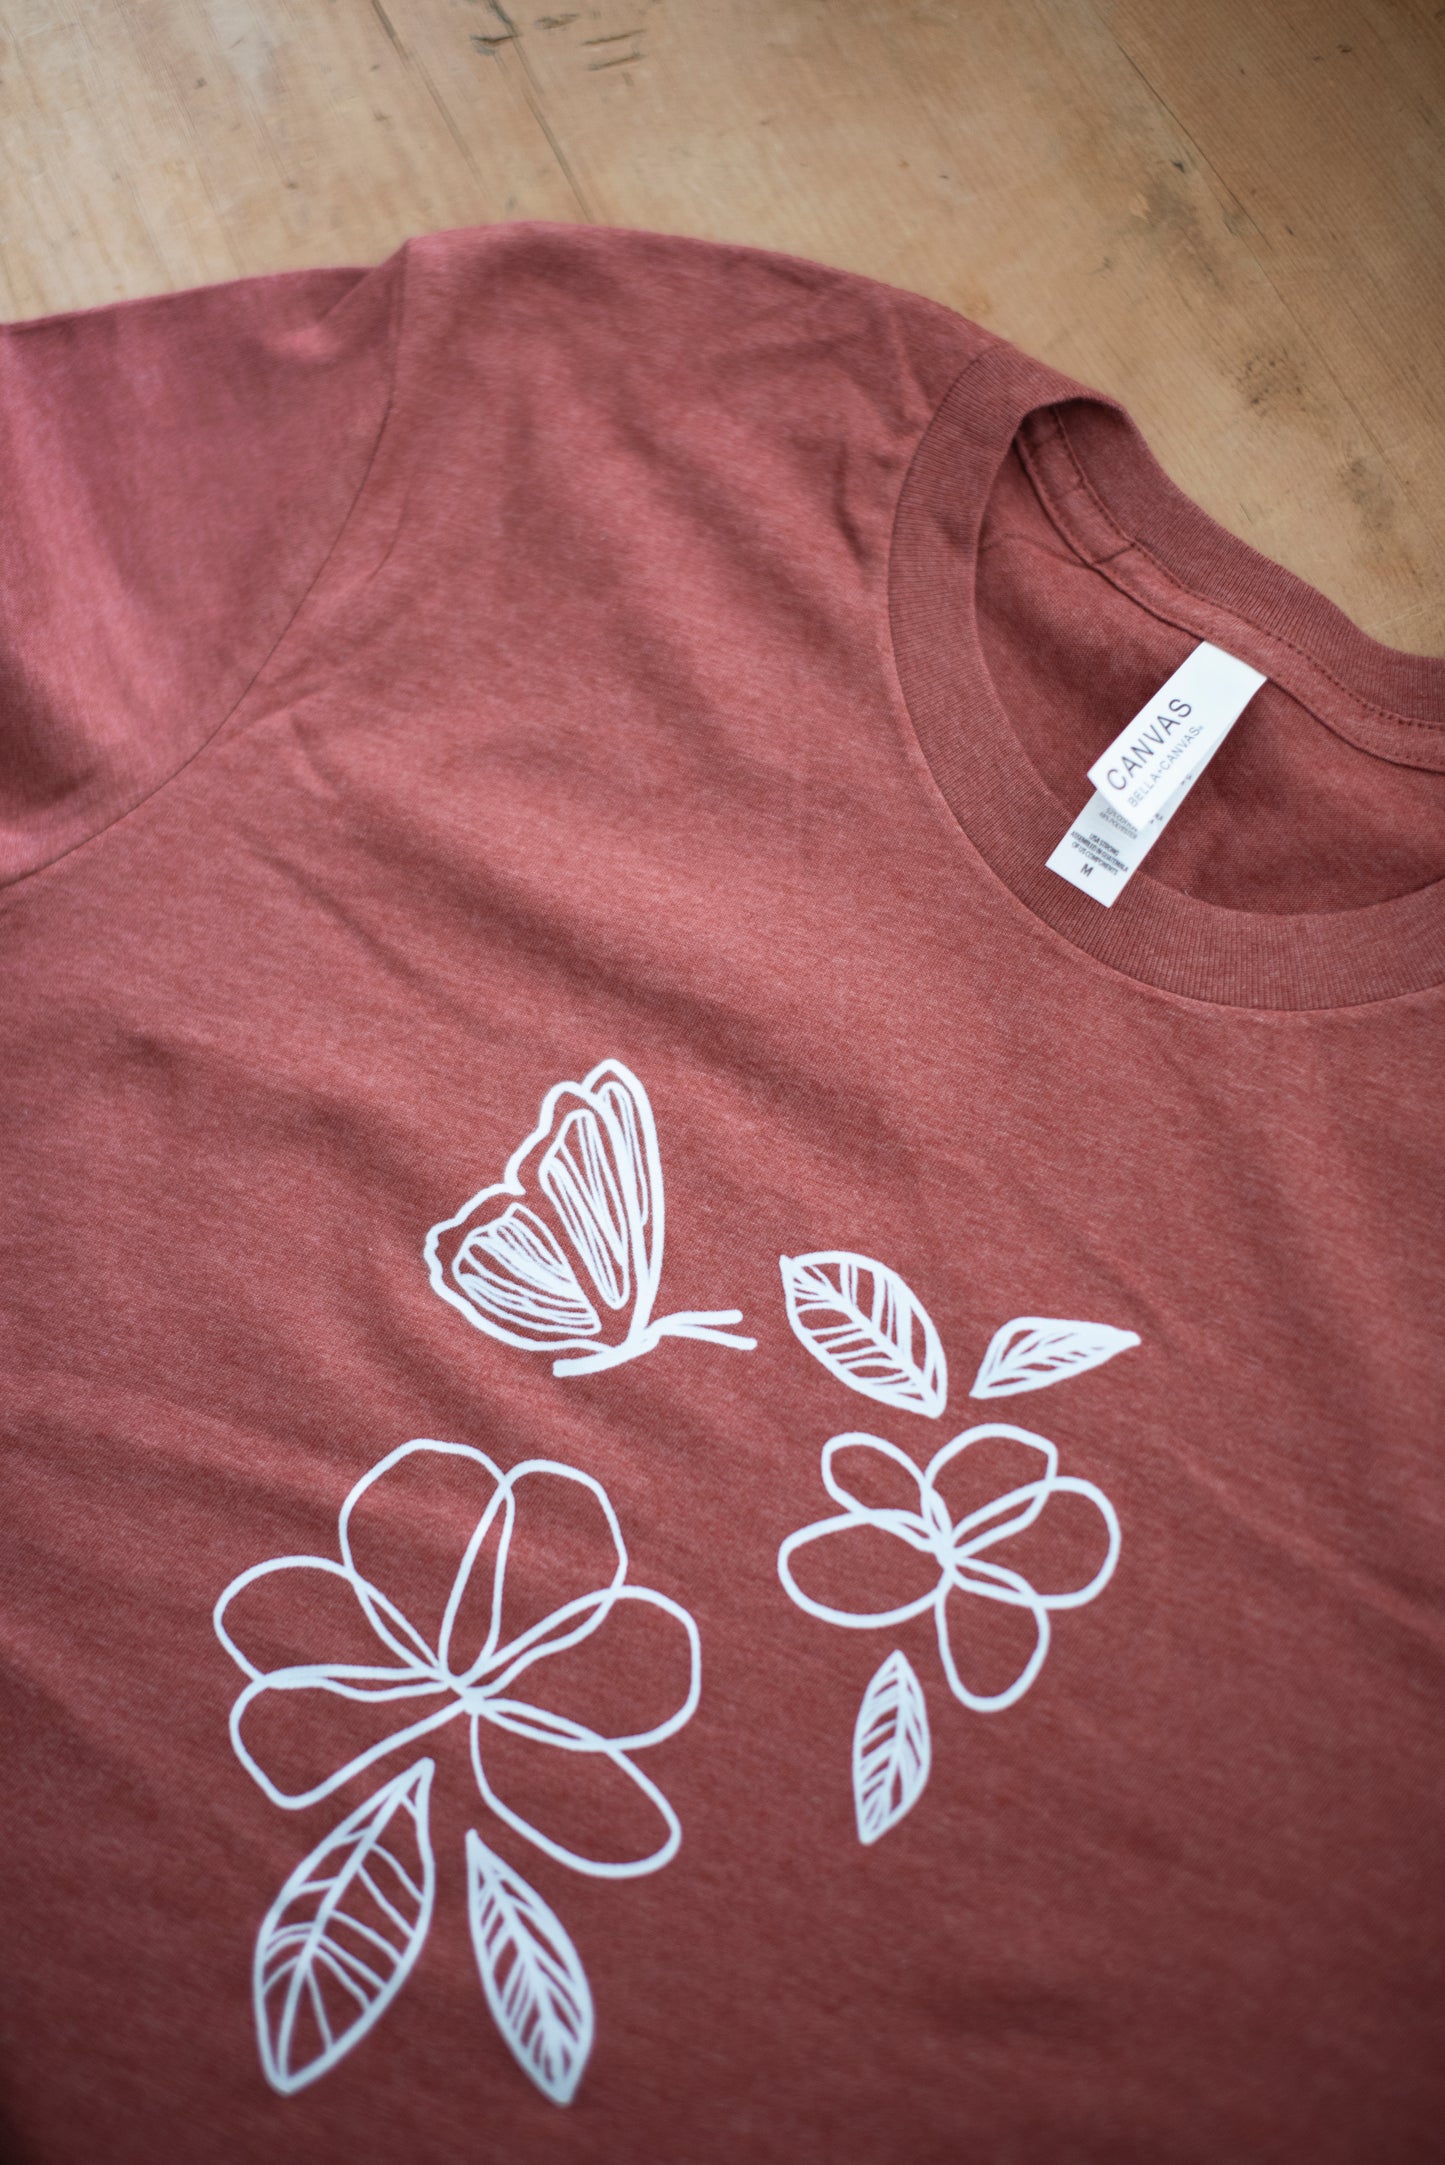 Consider The Lilies T-Shirt